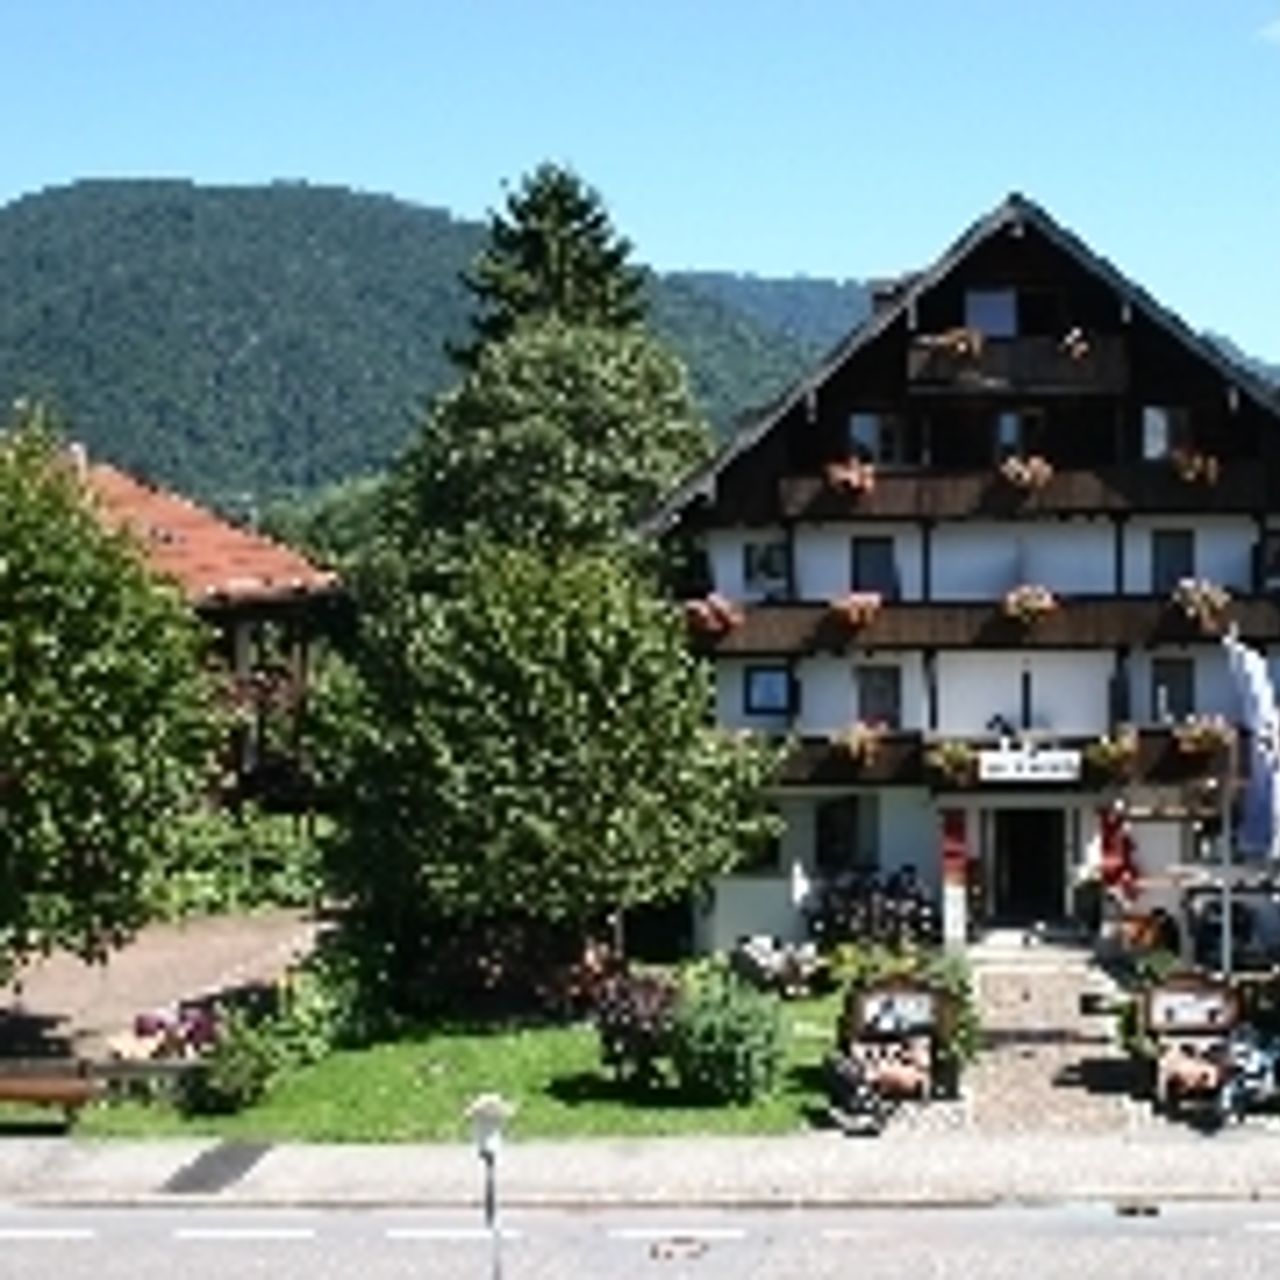 Land-gut-Hotel Askania in Bad Wiessee - HOTEL DE